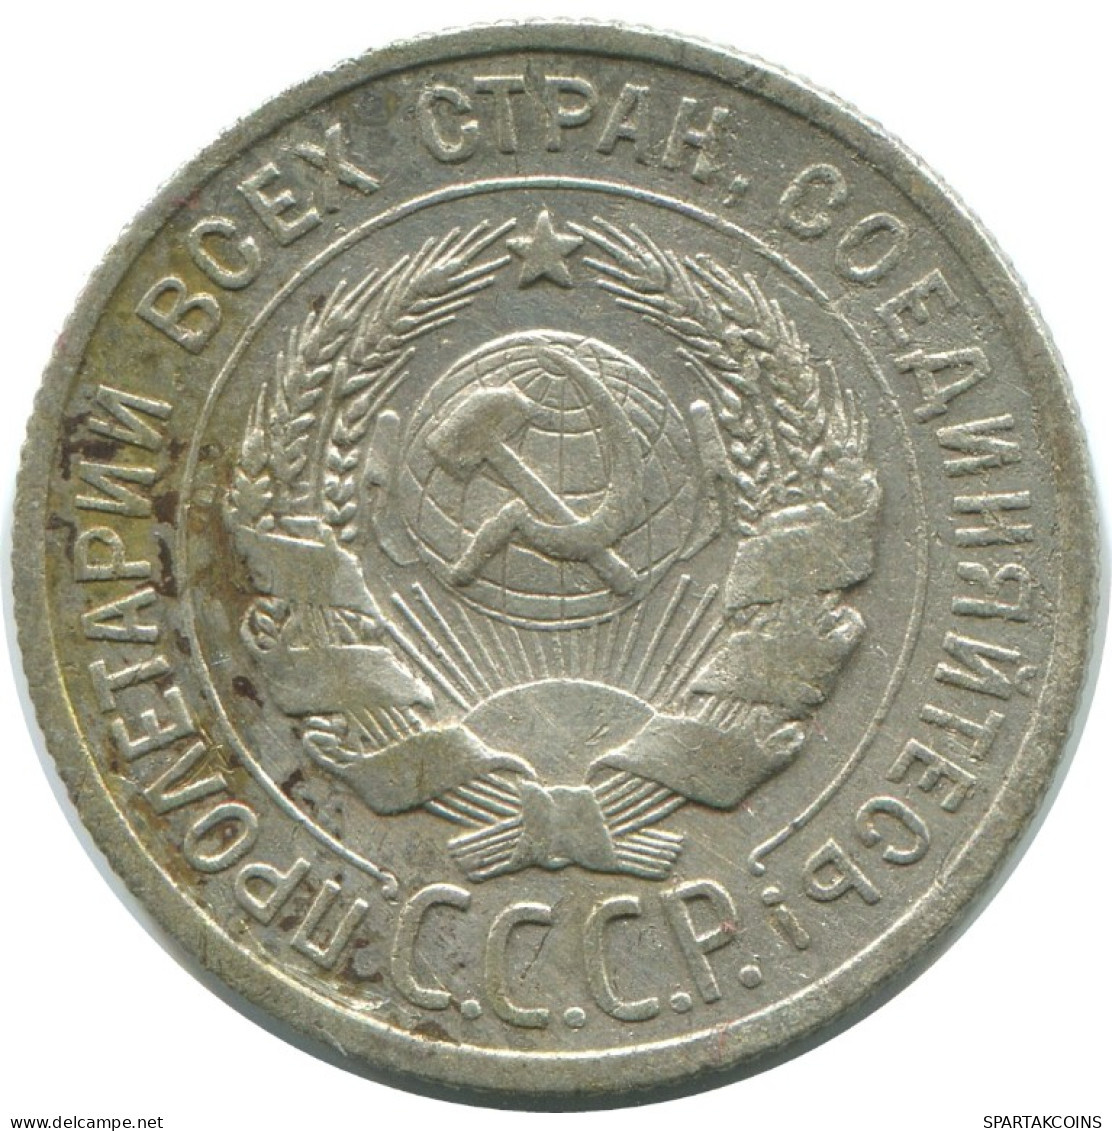 20 KOPEKS 1924 RUSSLAND RUSSIA USSR SILBER Münze HIGH GRADE #AF295.4.D.A - Rusland